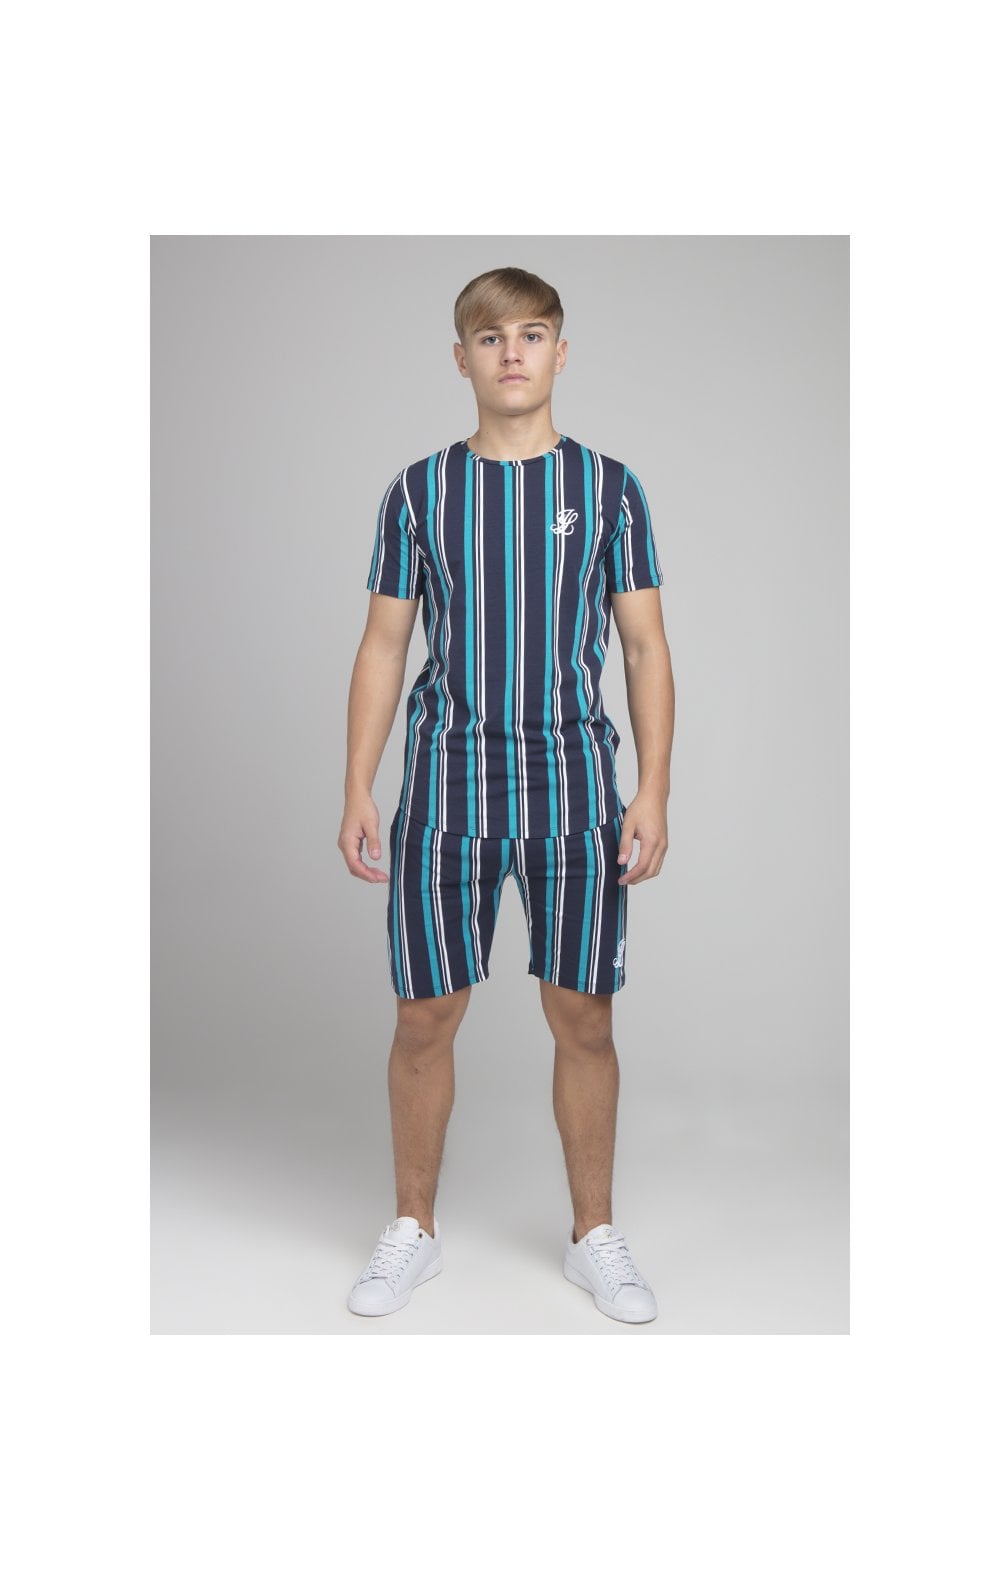 Illusive London Stripe Shorts - Navy & Teal (3)